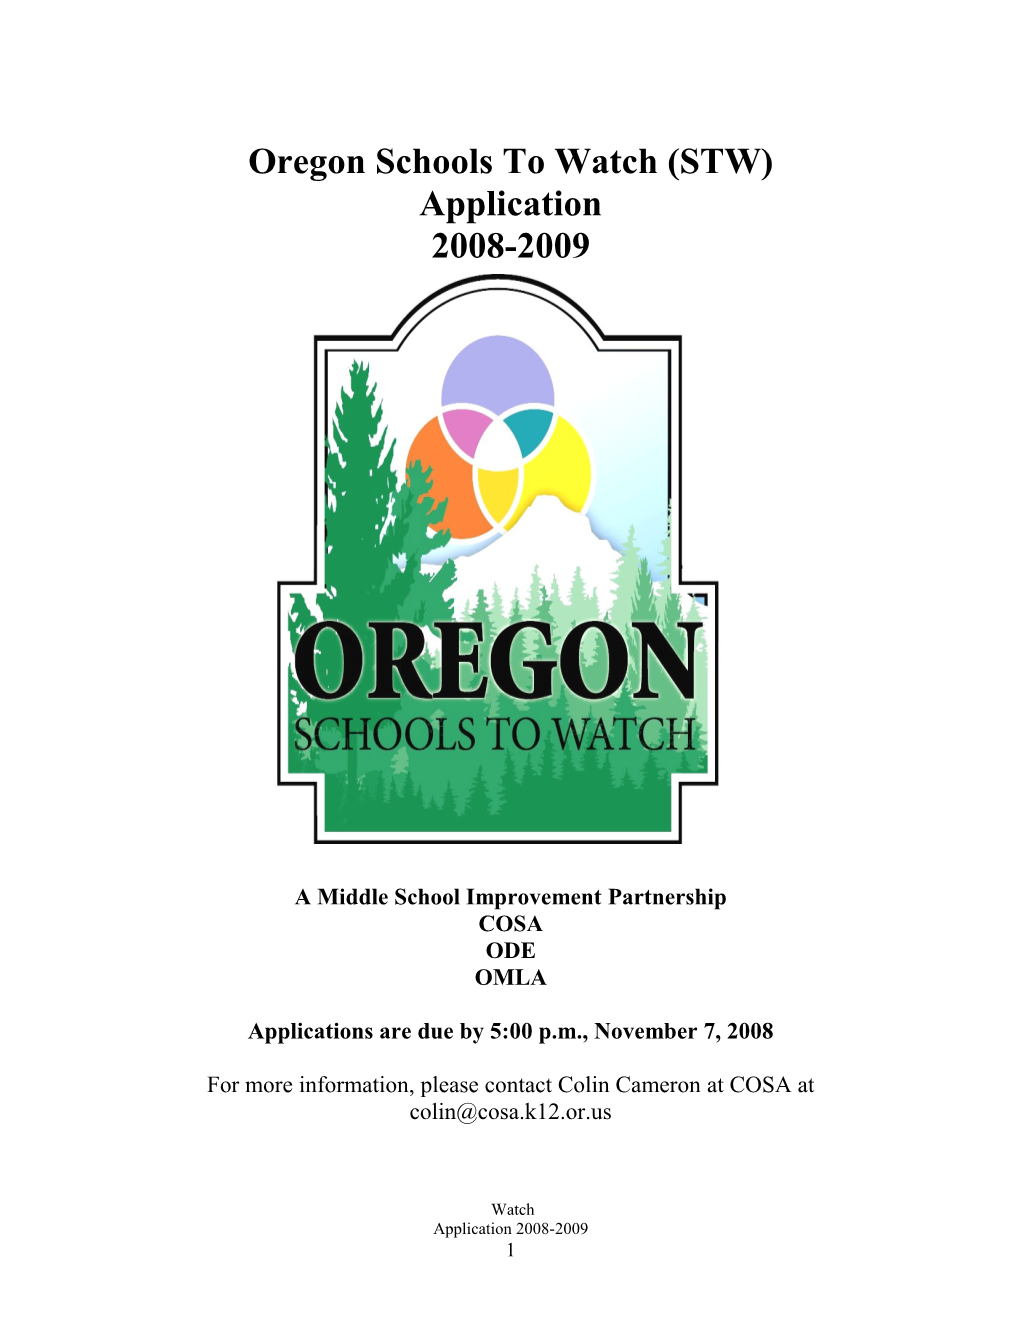 Oregon Schools to Watch